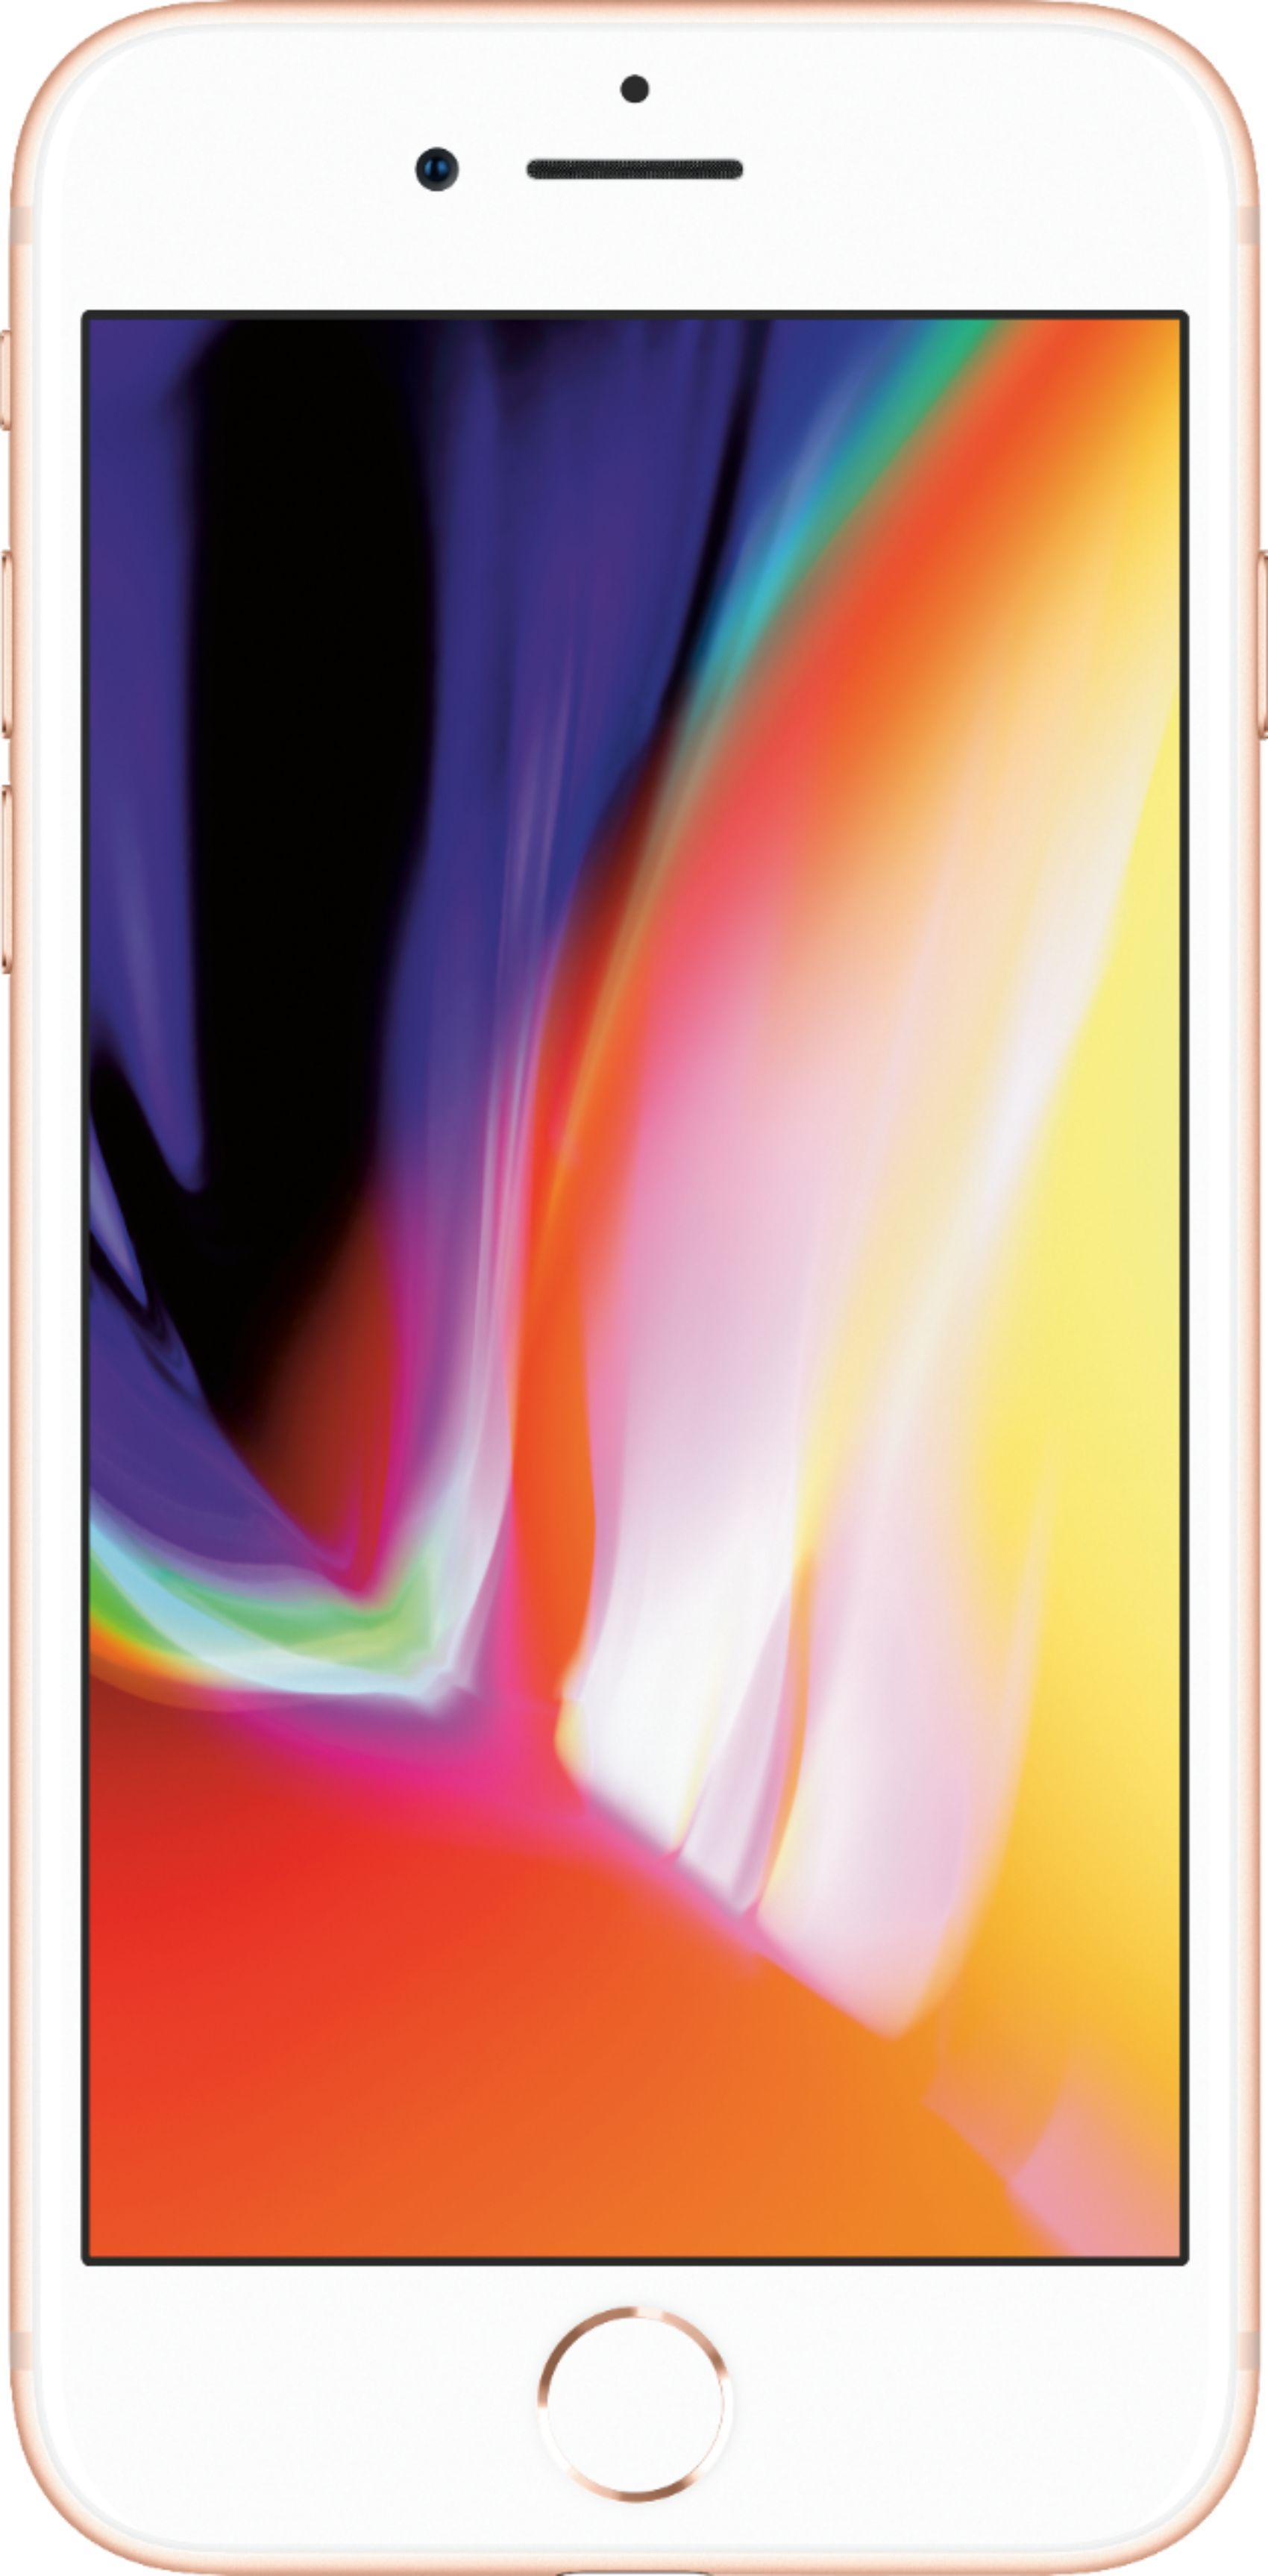 Apple iPhone 8 256GB (AT&T) MQ7H2LL/A - Best Buy